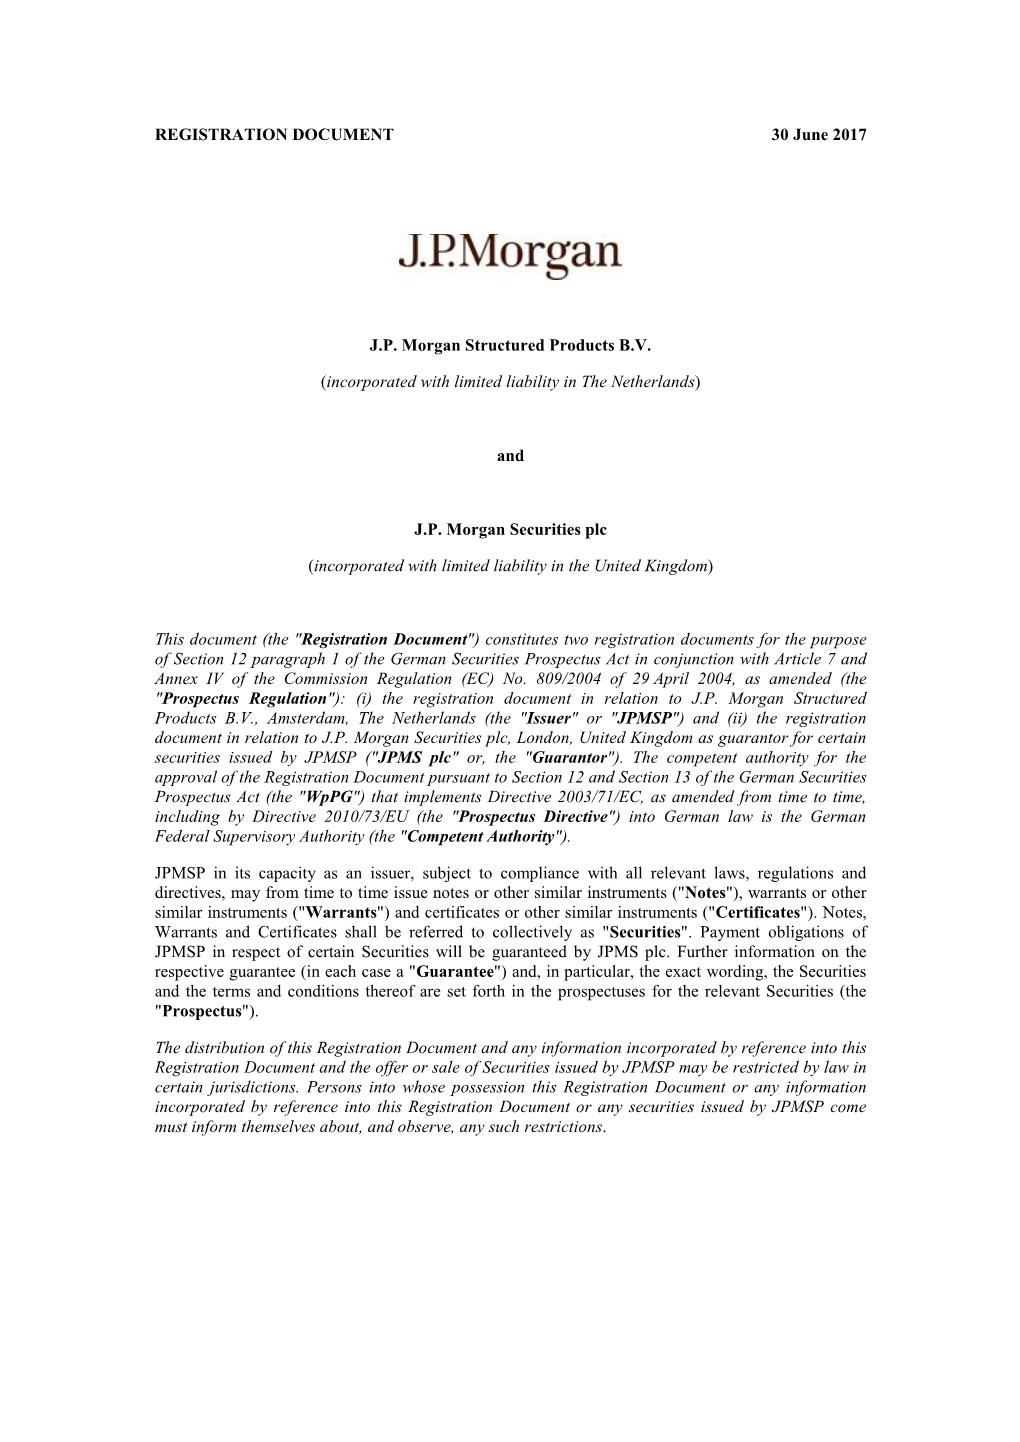 REGISTRATION DOCUMENT 30 June 2017 J.P. Morgan Structured